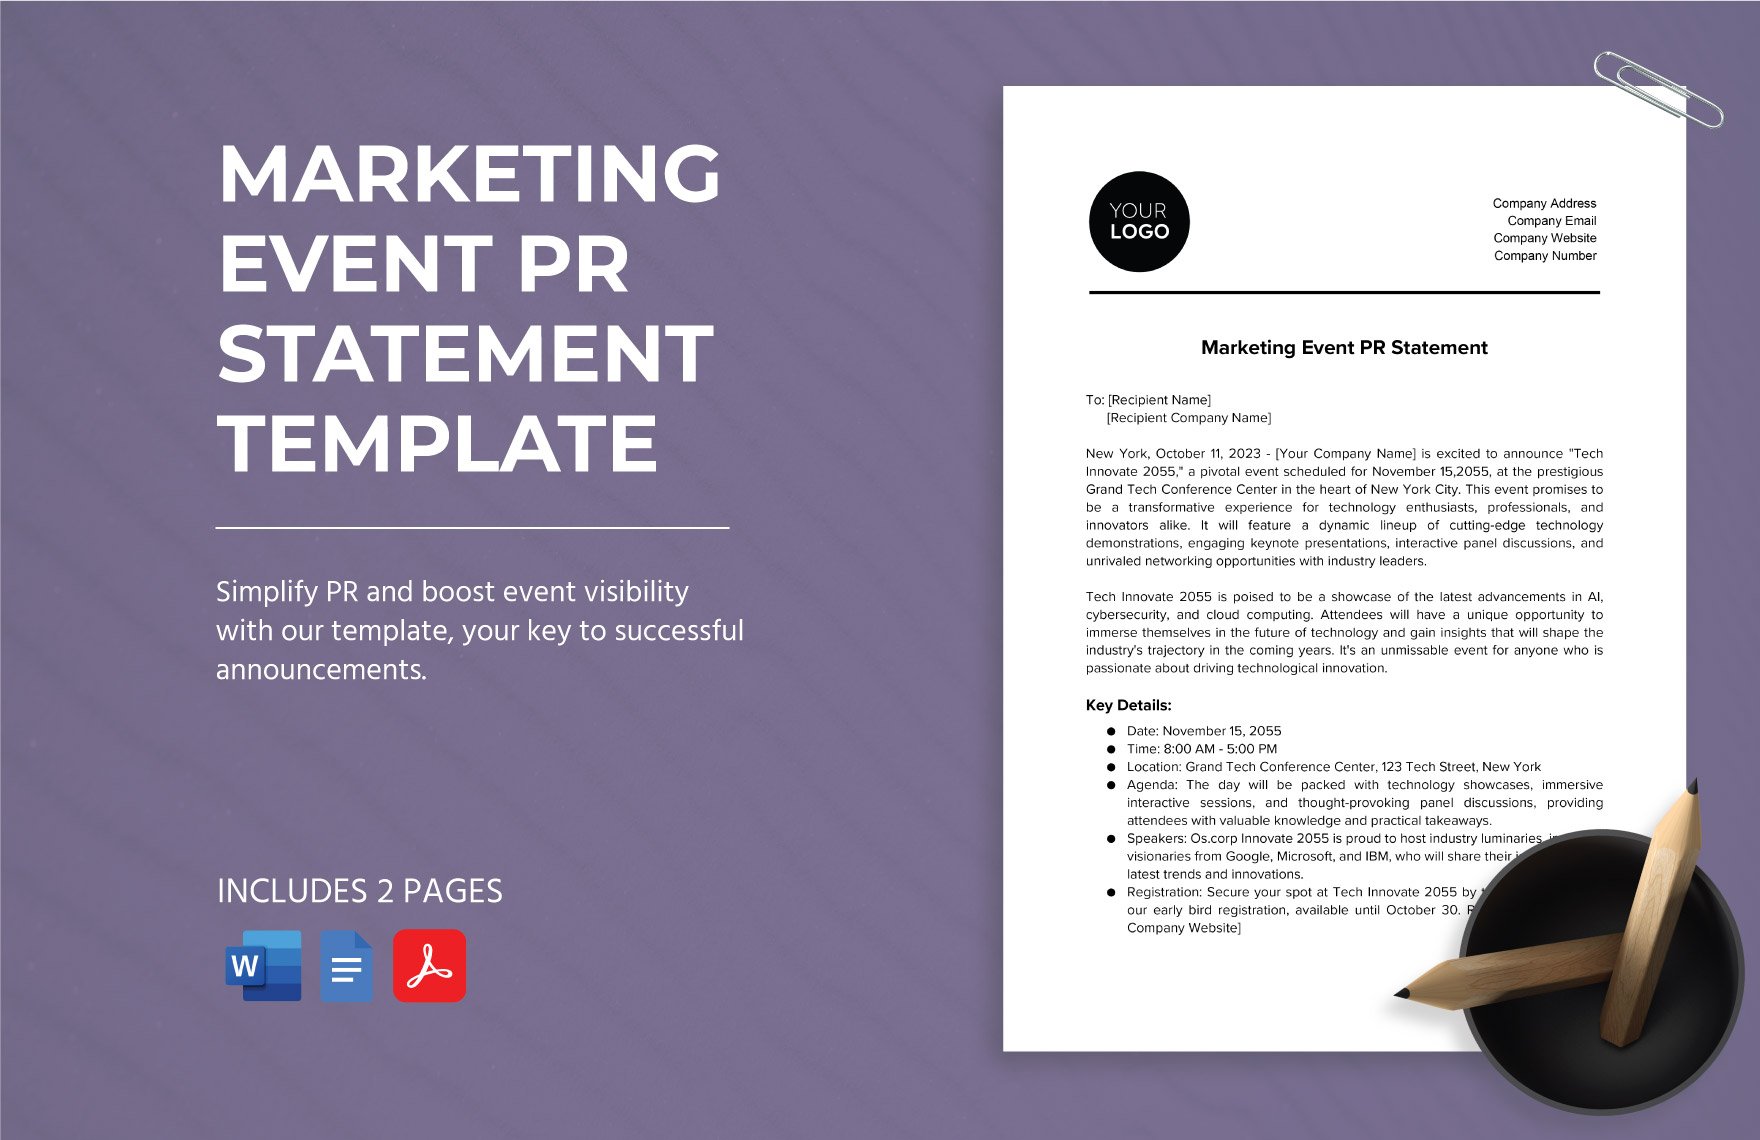 Marketing Event PR Statement Template